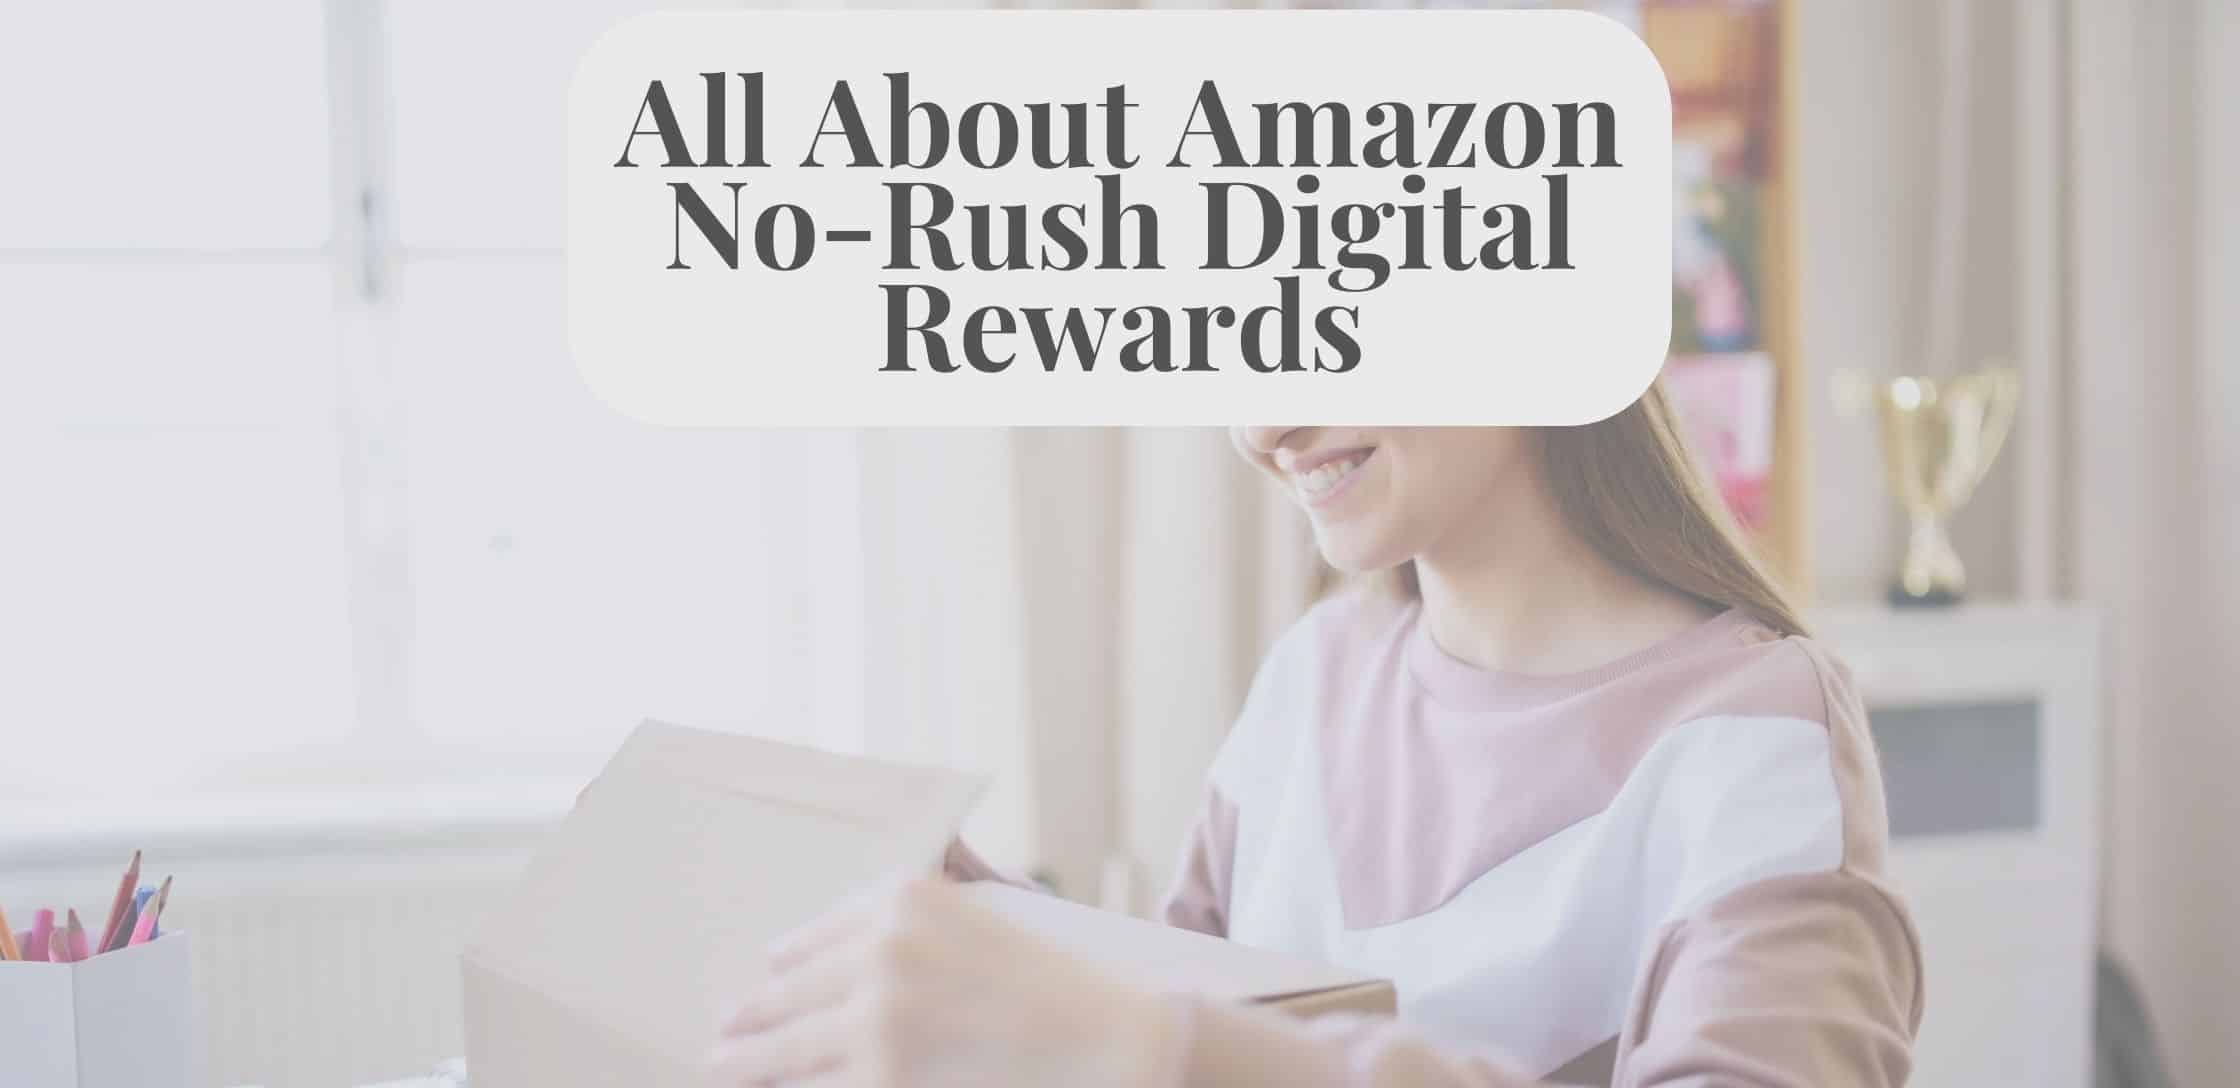 https://yofreesamples.com/wp-content/uploads/2022/06/All-About-Amazon-No-Rush-Digital-Rewards-1.jpg